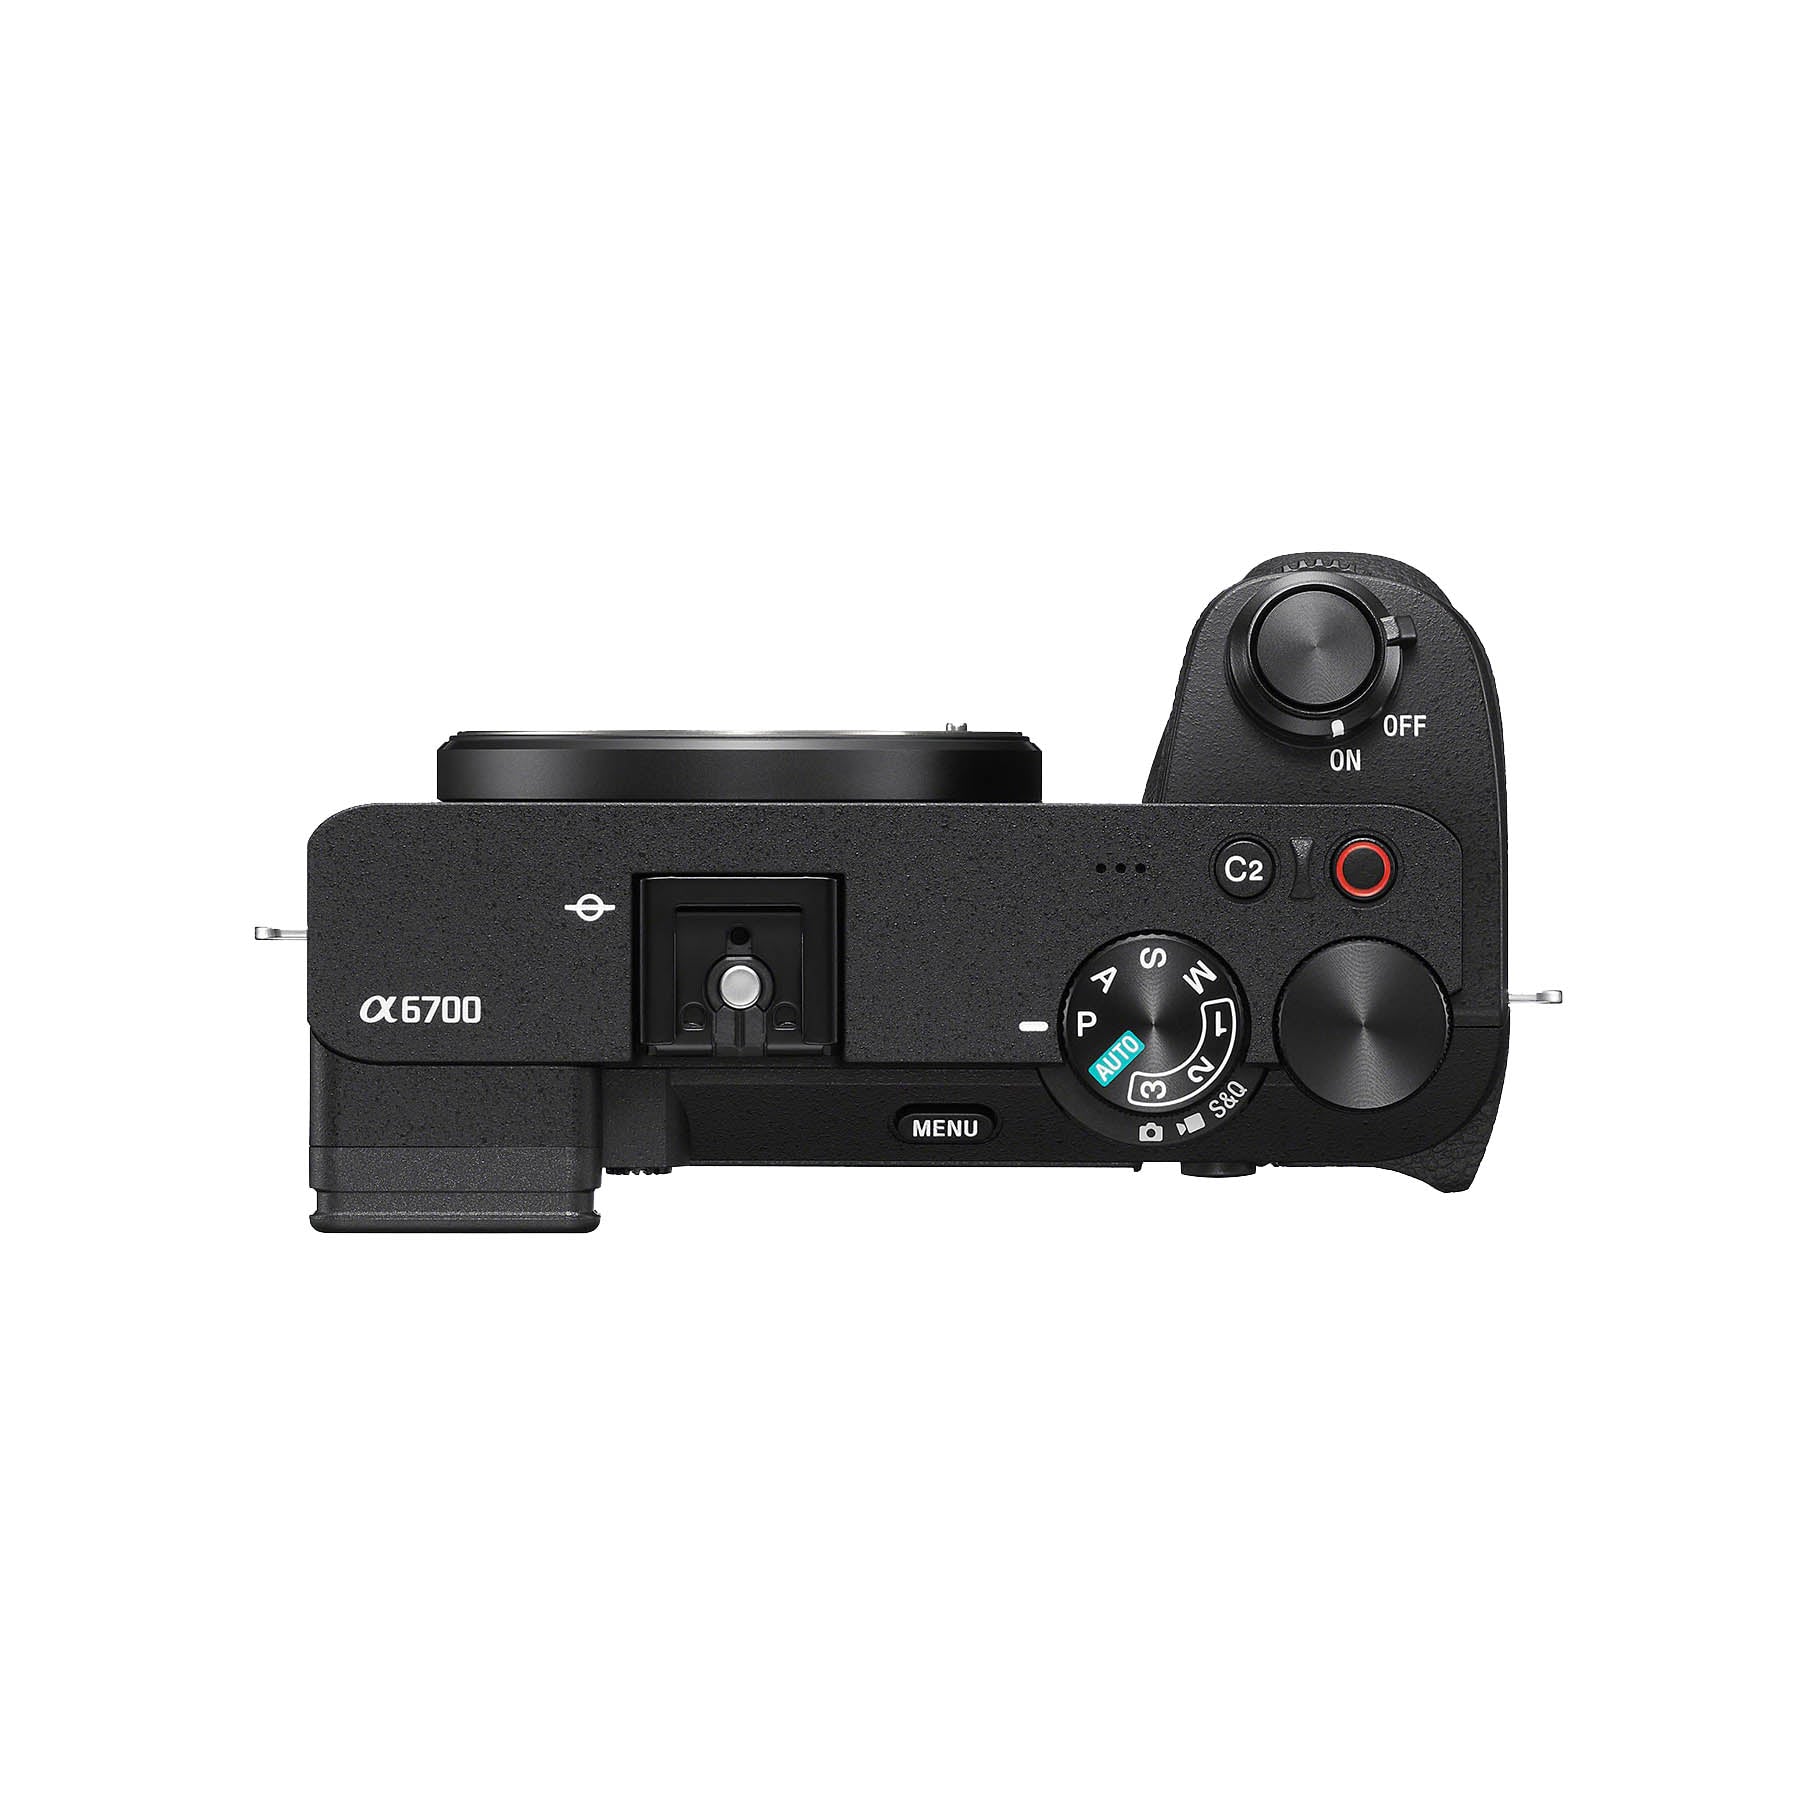 Sony a6700 18-135mm Digital Camera Kit